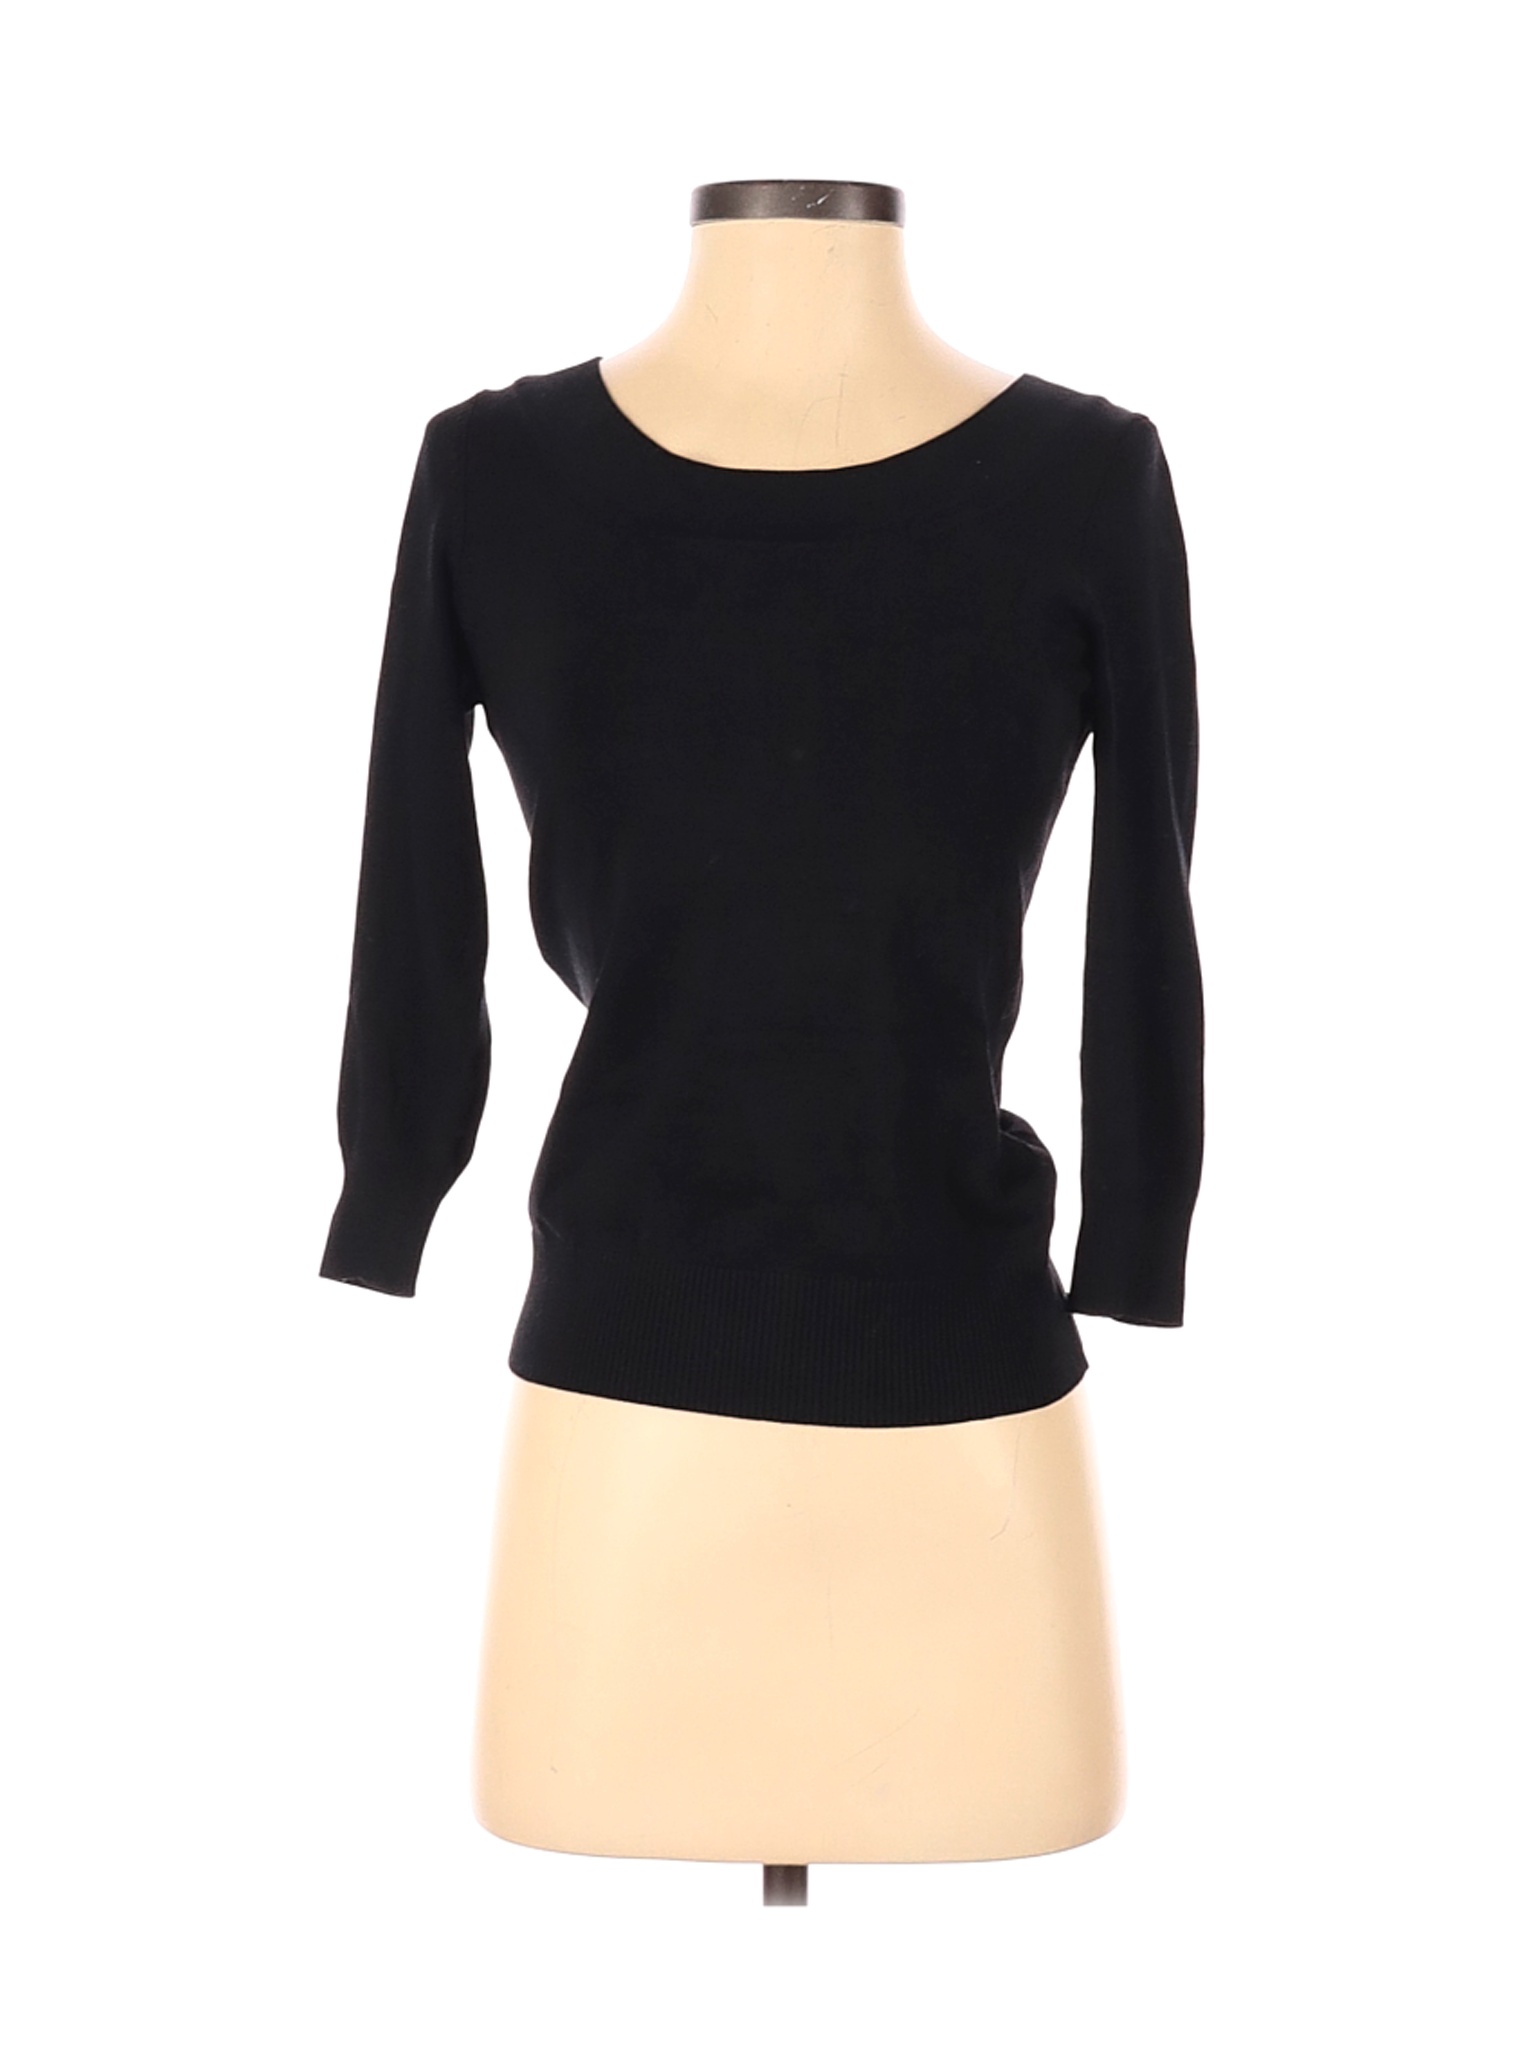 INC International Concepts Women Black Silk Pullover Sweater S | eBay